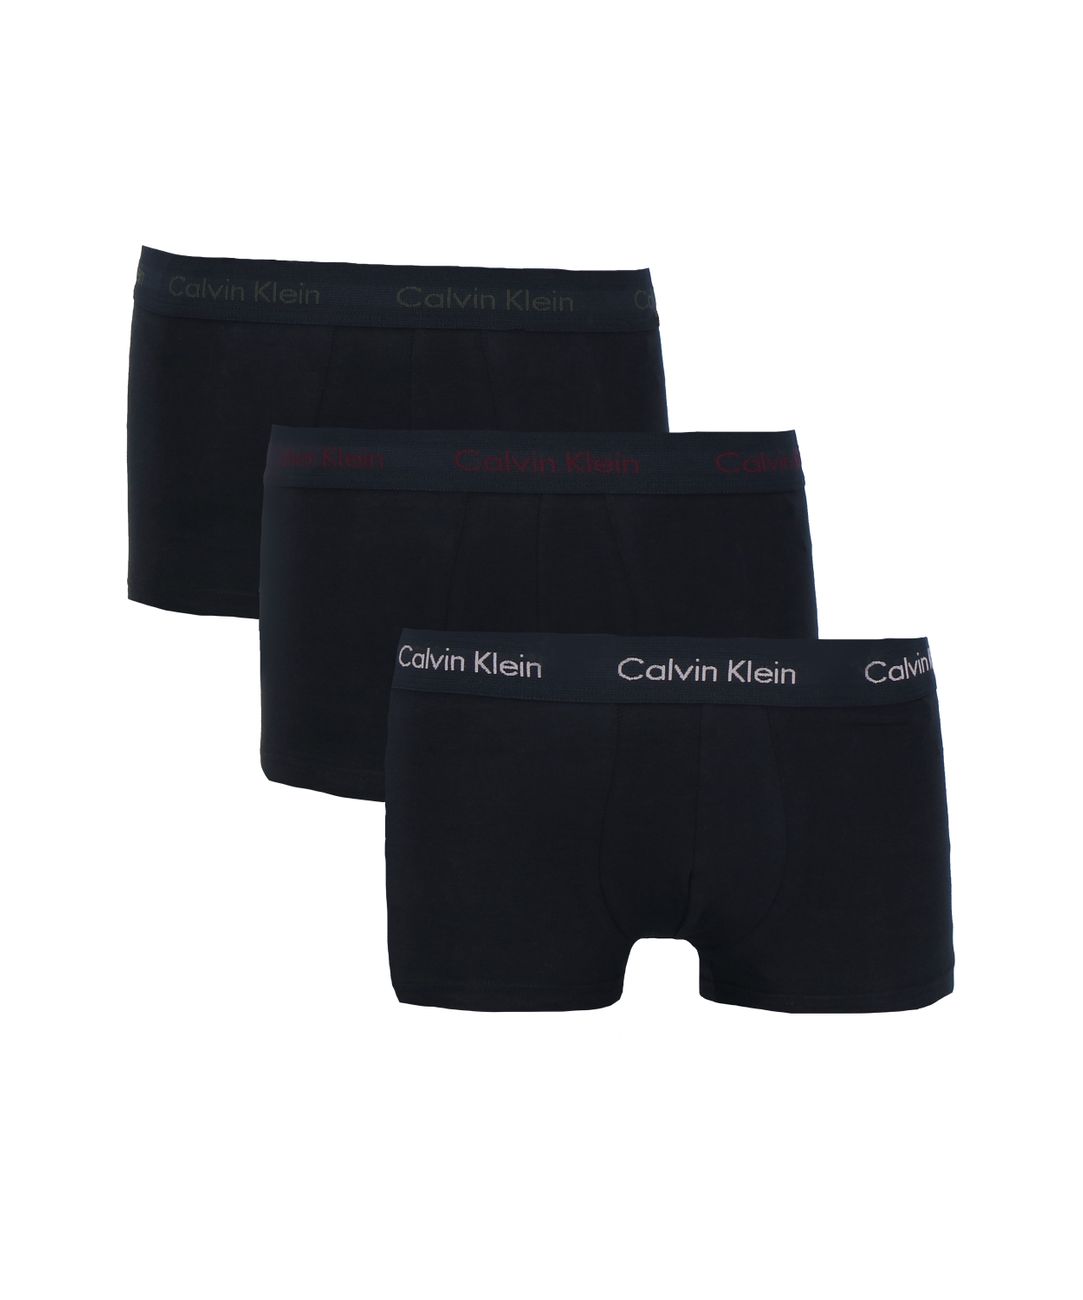 CALVIN KLEIN LOW RISE TRUNK 3er Pack Herren Boxershorts - Calvin Klein - SAGATOO - 8720107564947